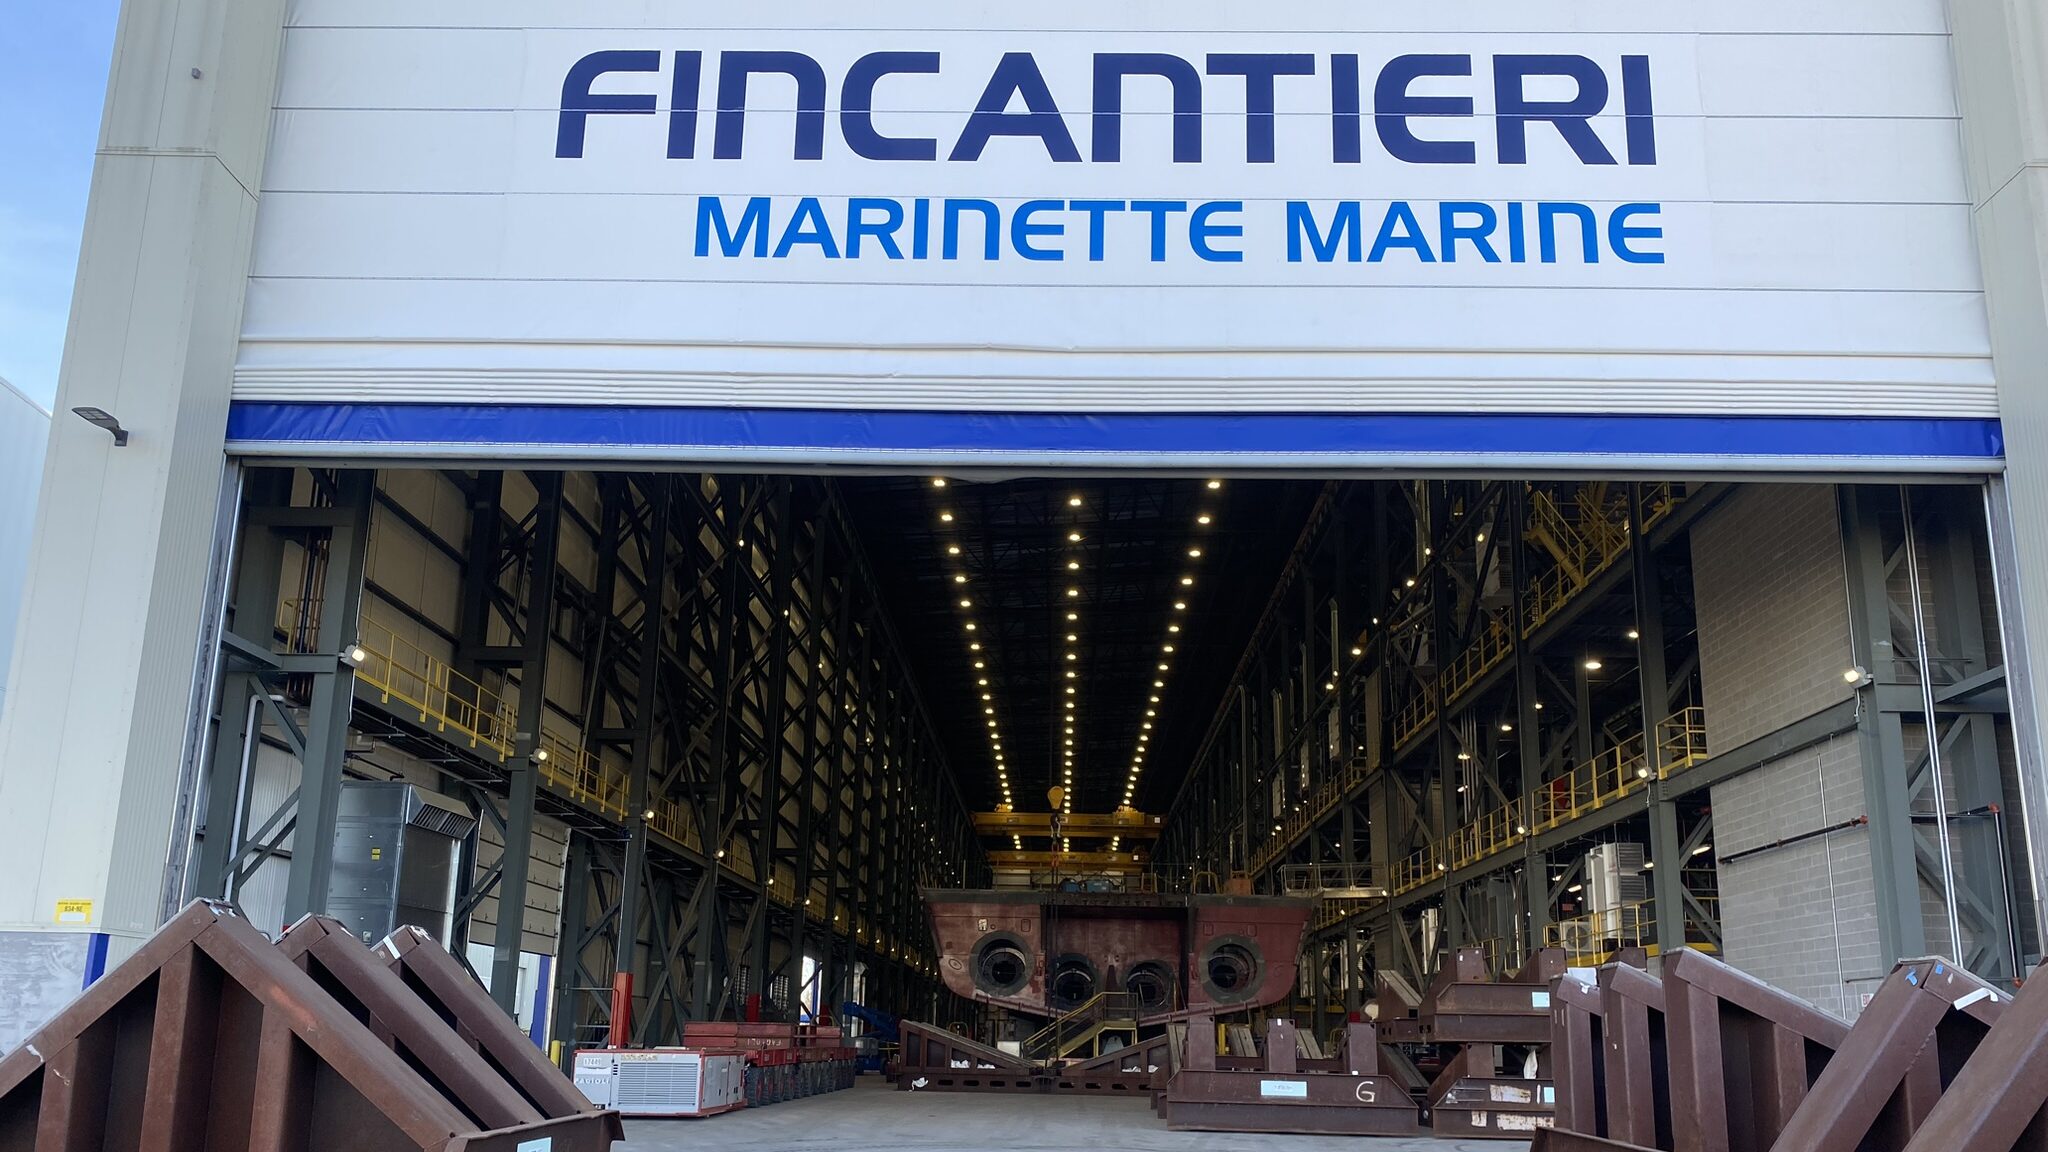 Fincantieri finishing $300M shipyard renovations, a big bet on the US Navy’s frigate plans